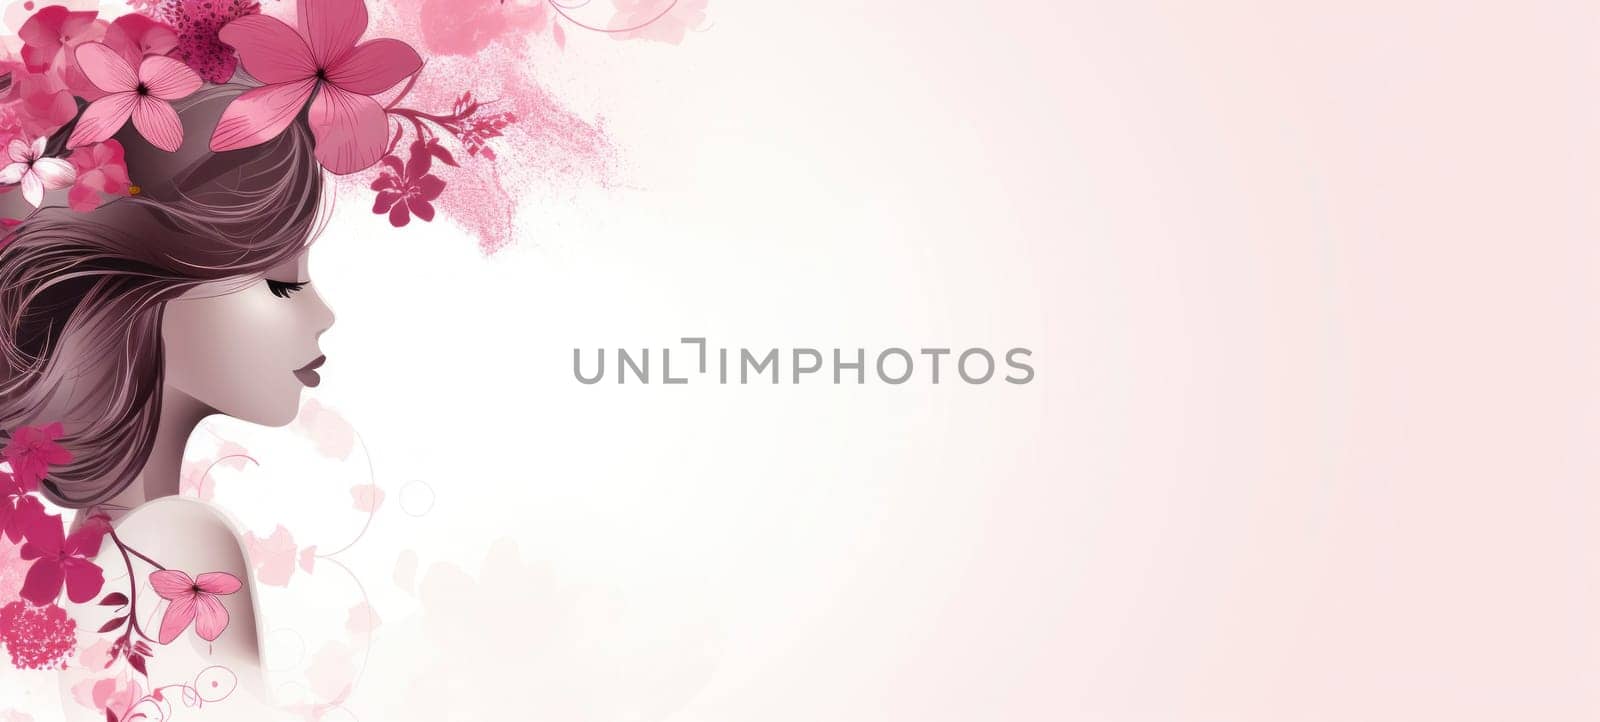 Elegant Floral Woman Illustration in Pink Tones by andreyz